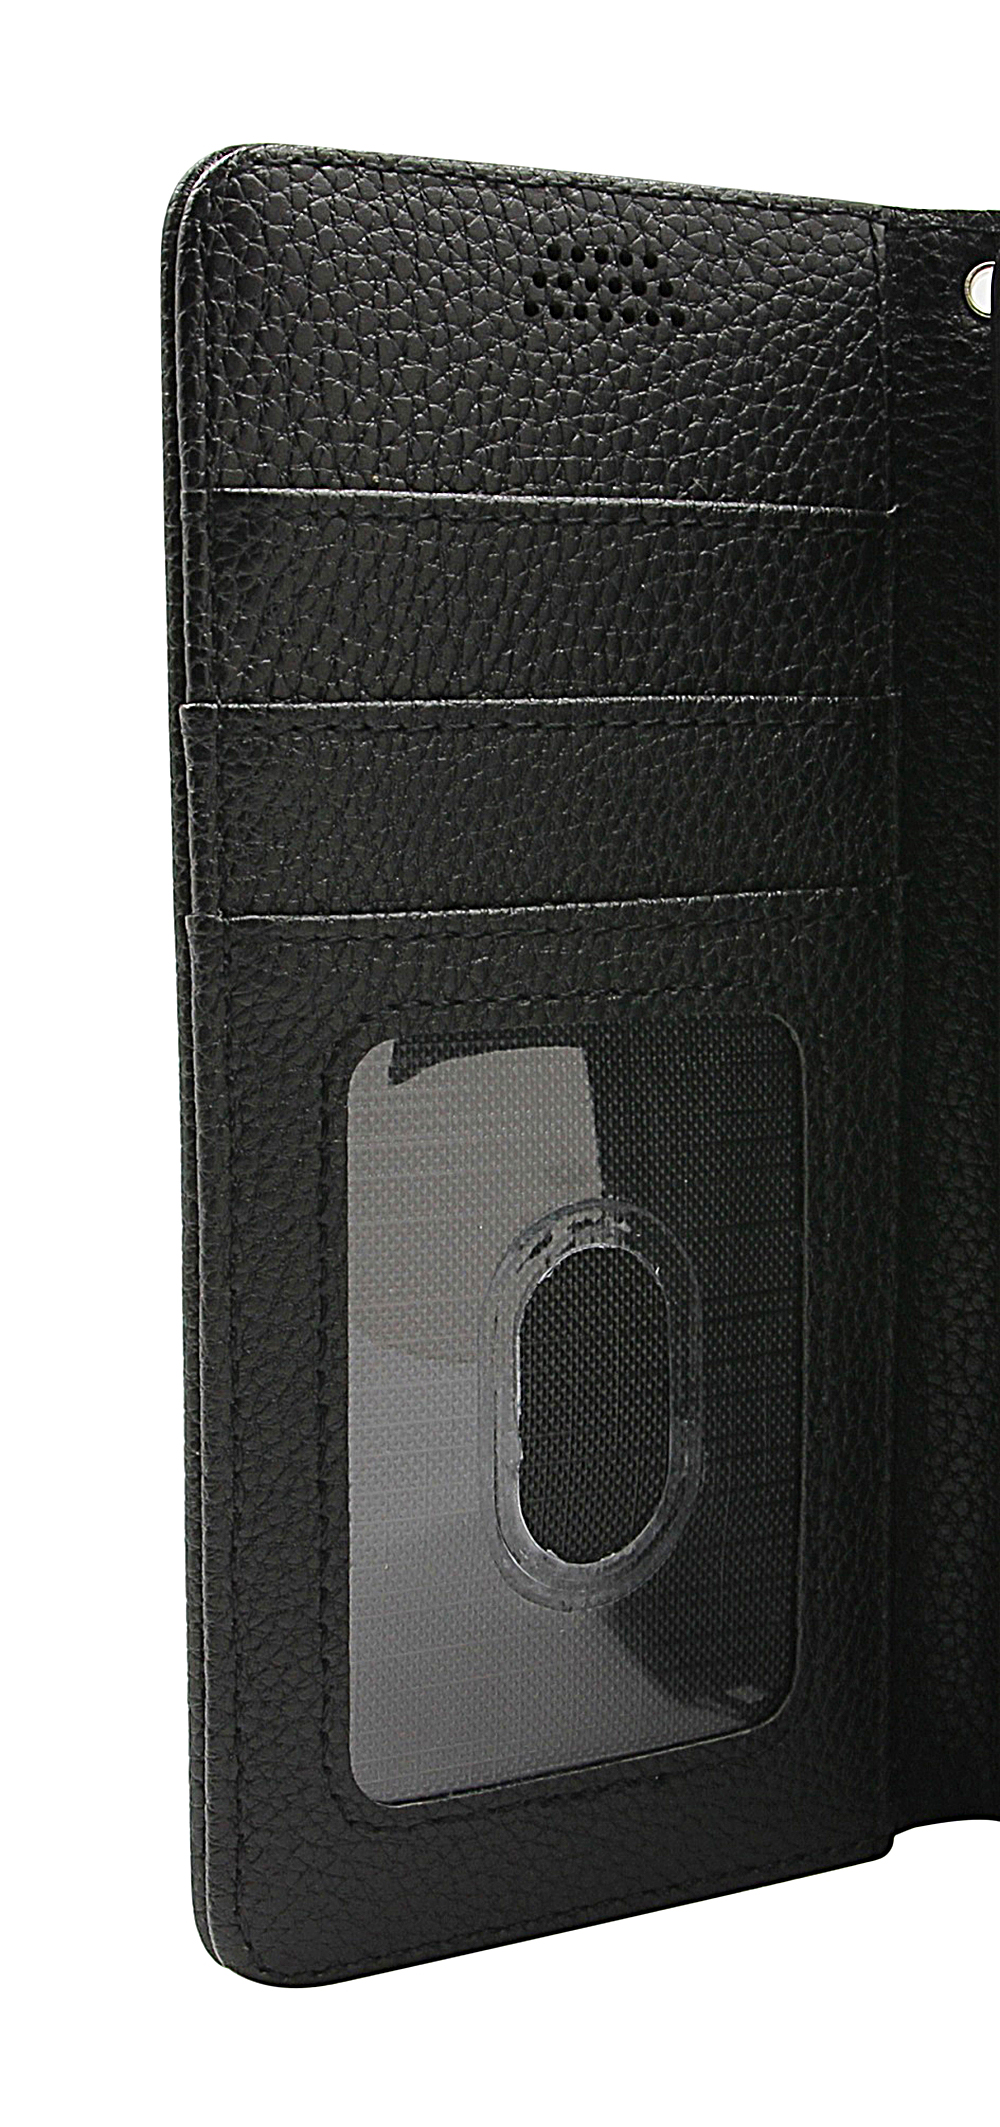 New Standcase Wallet Motorola Edge